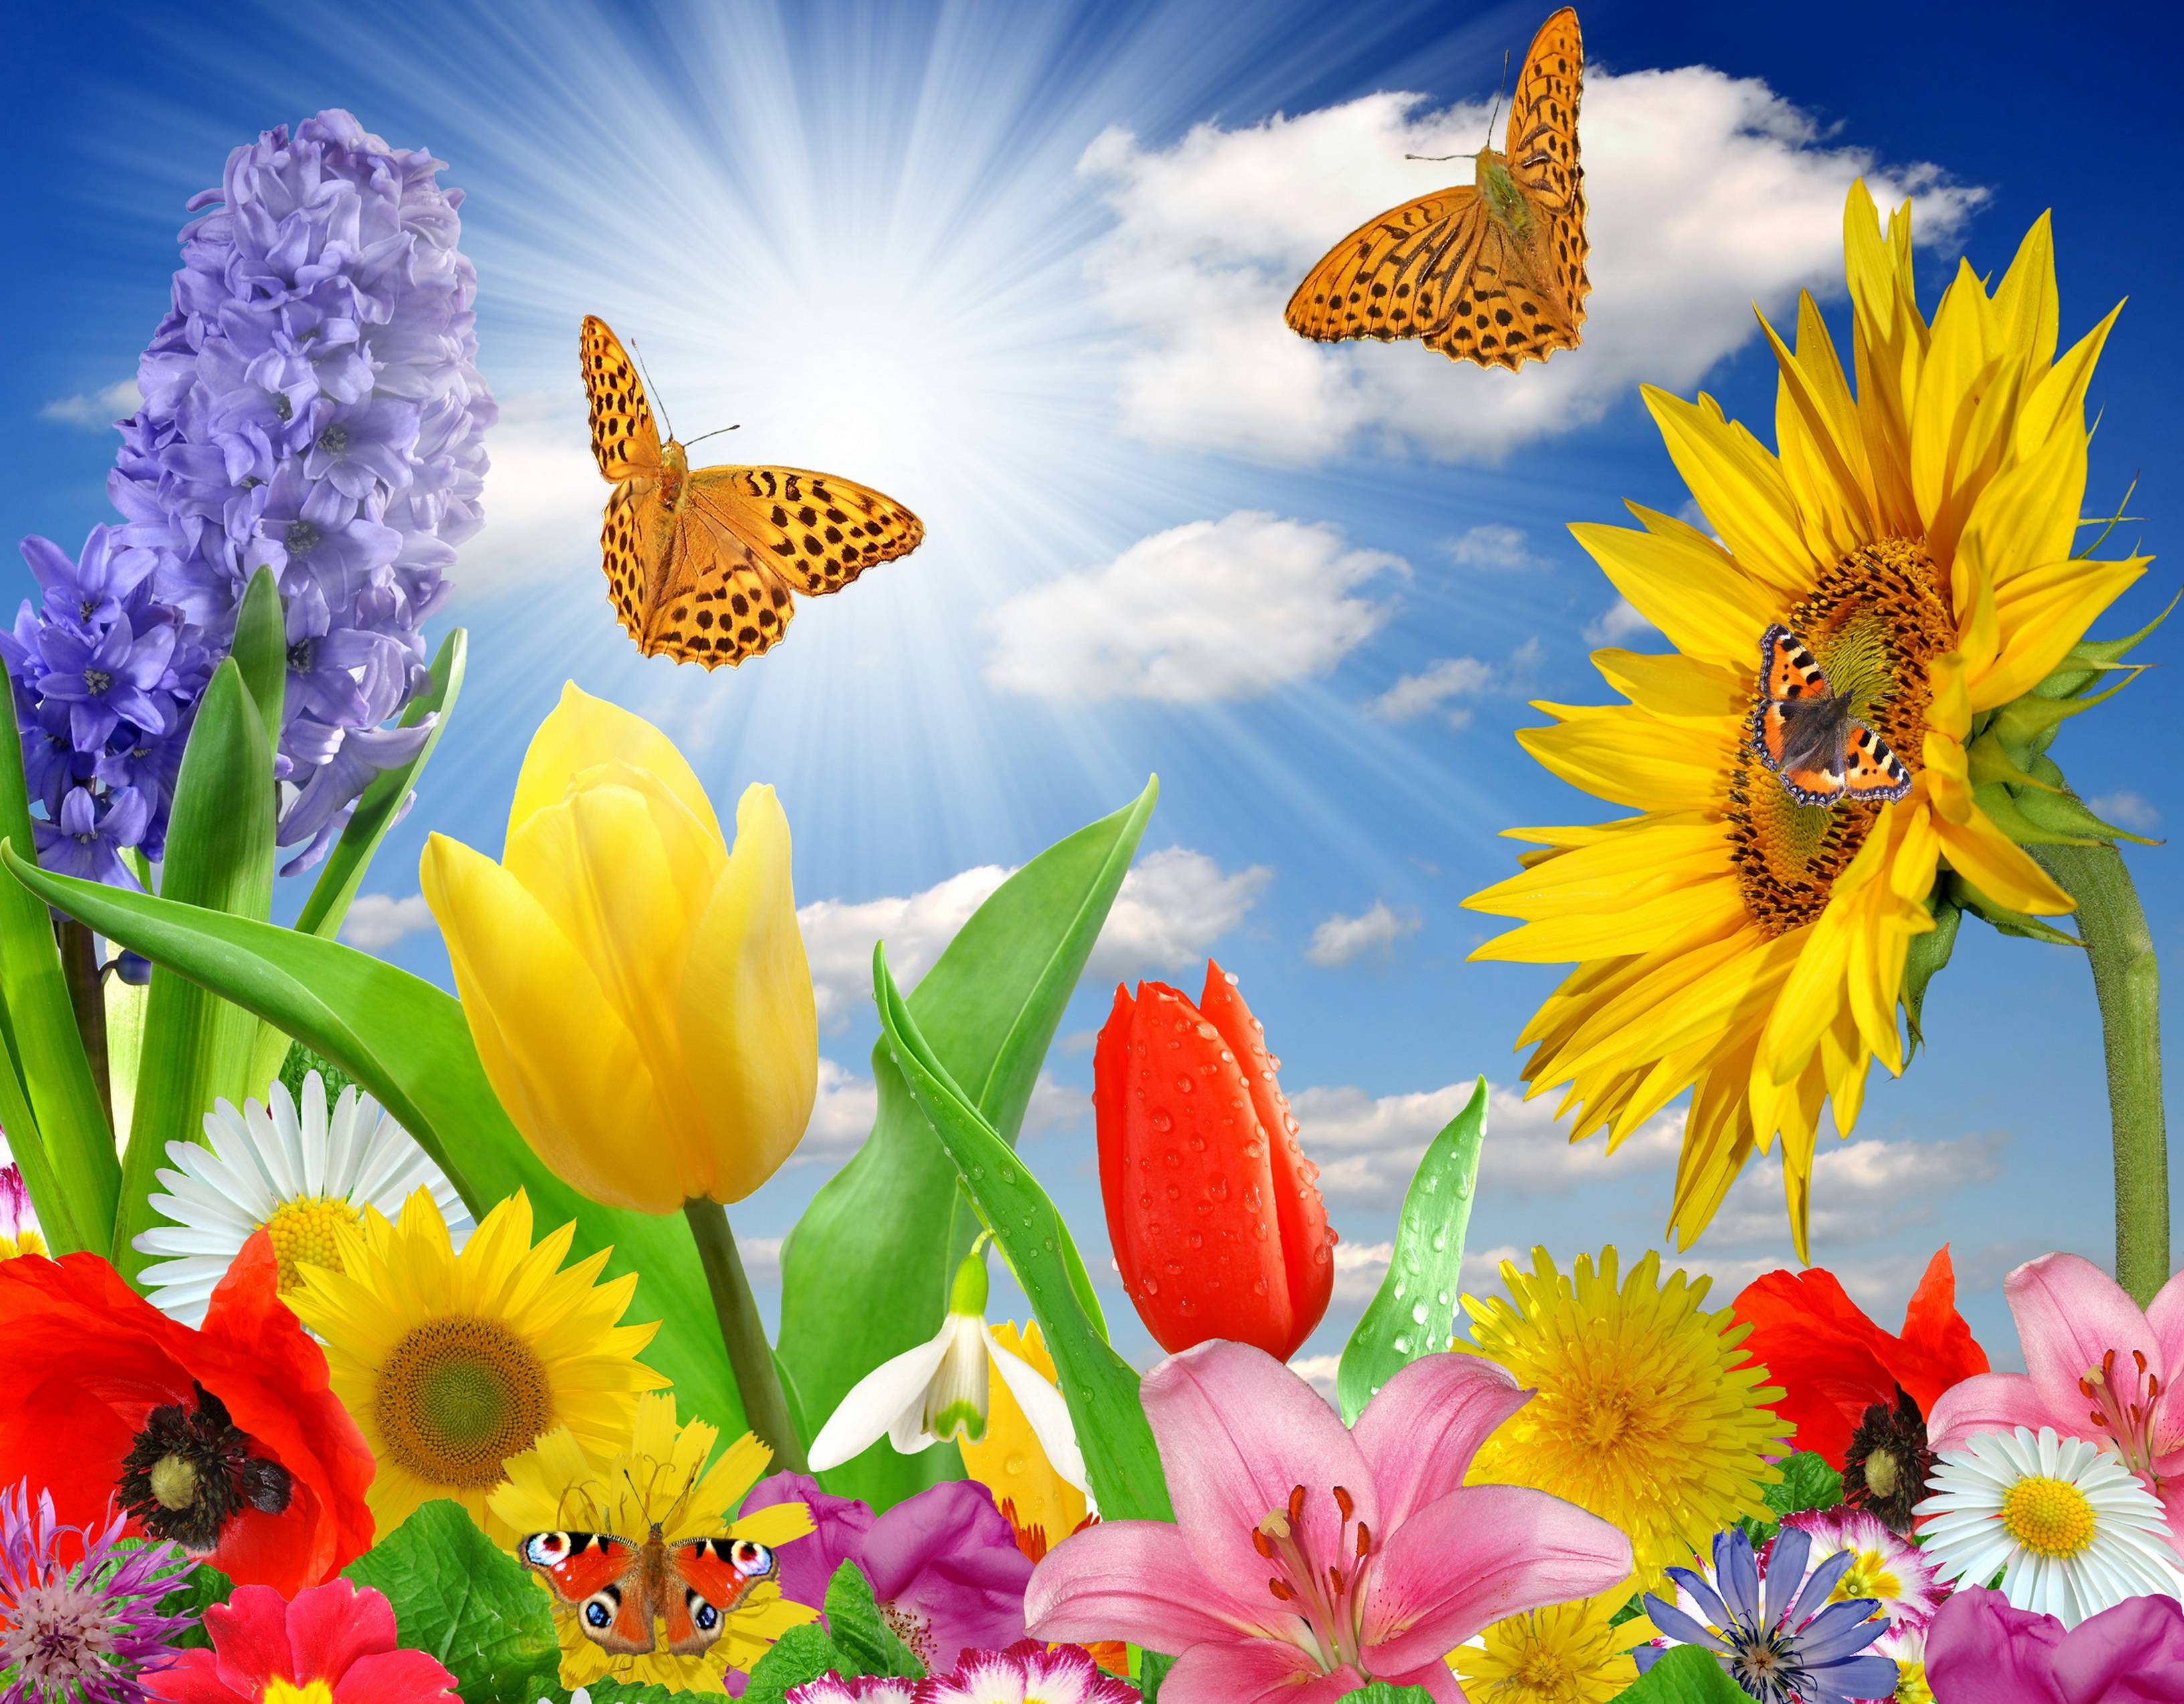 Spring Flowers And Butterflies Wallpaper High Definition, Flower